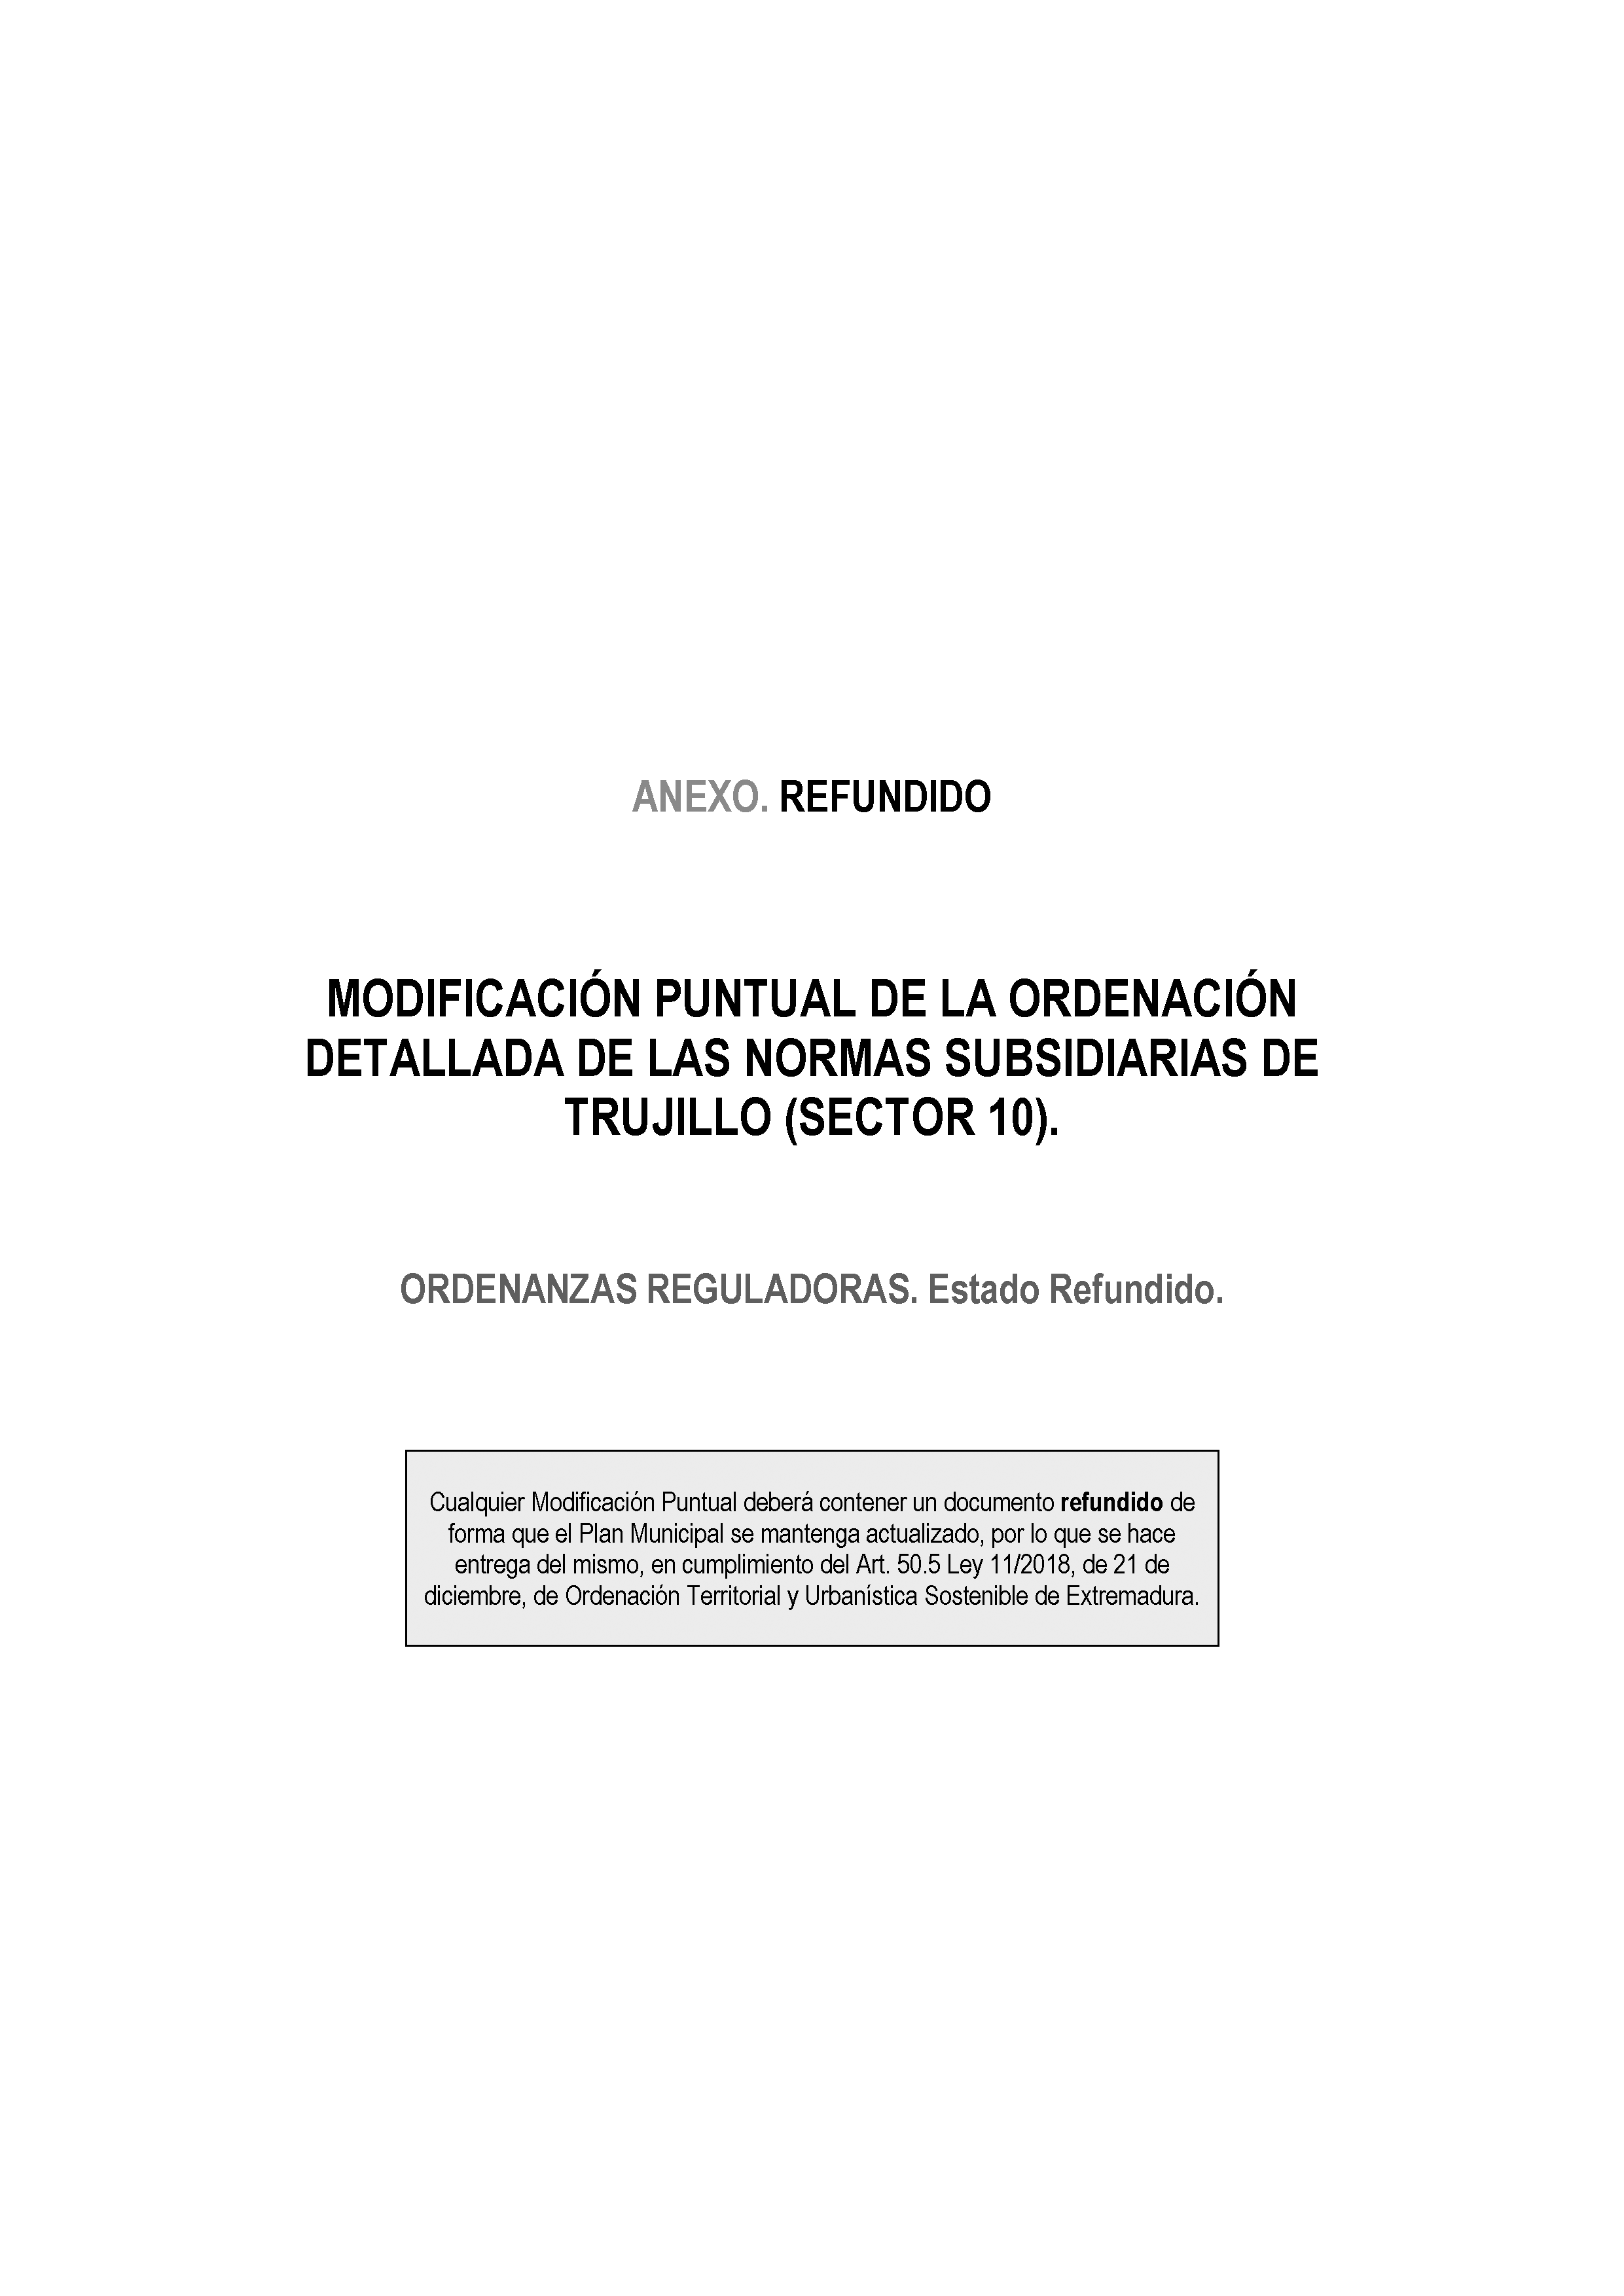 ANEXO - MODIFICACIÓN PUNTUAL DE LA ORDENACIÓN DETALLADA DE LAS NORMAS SUBSIDIARIAS DE TRUJILLO (SECTOR 10) Pag 16